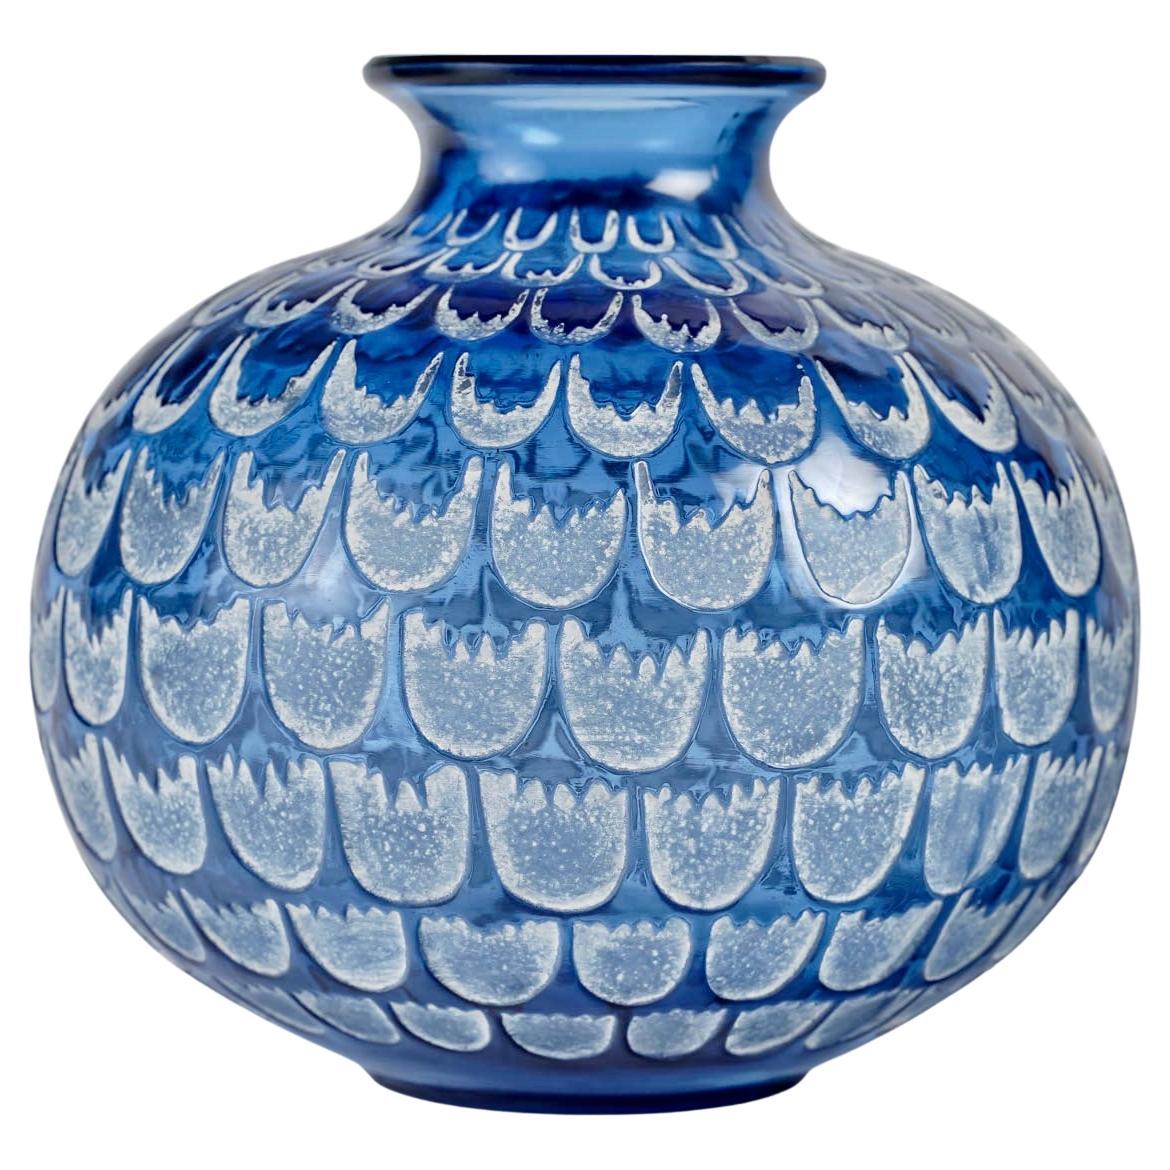 1930 Rene Lalique Vase Grenade Verre bleu marine avec Patina blanche en vente